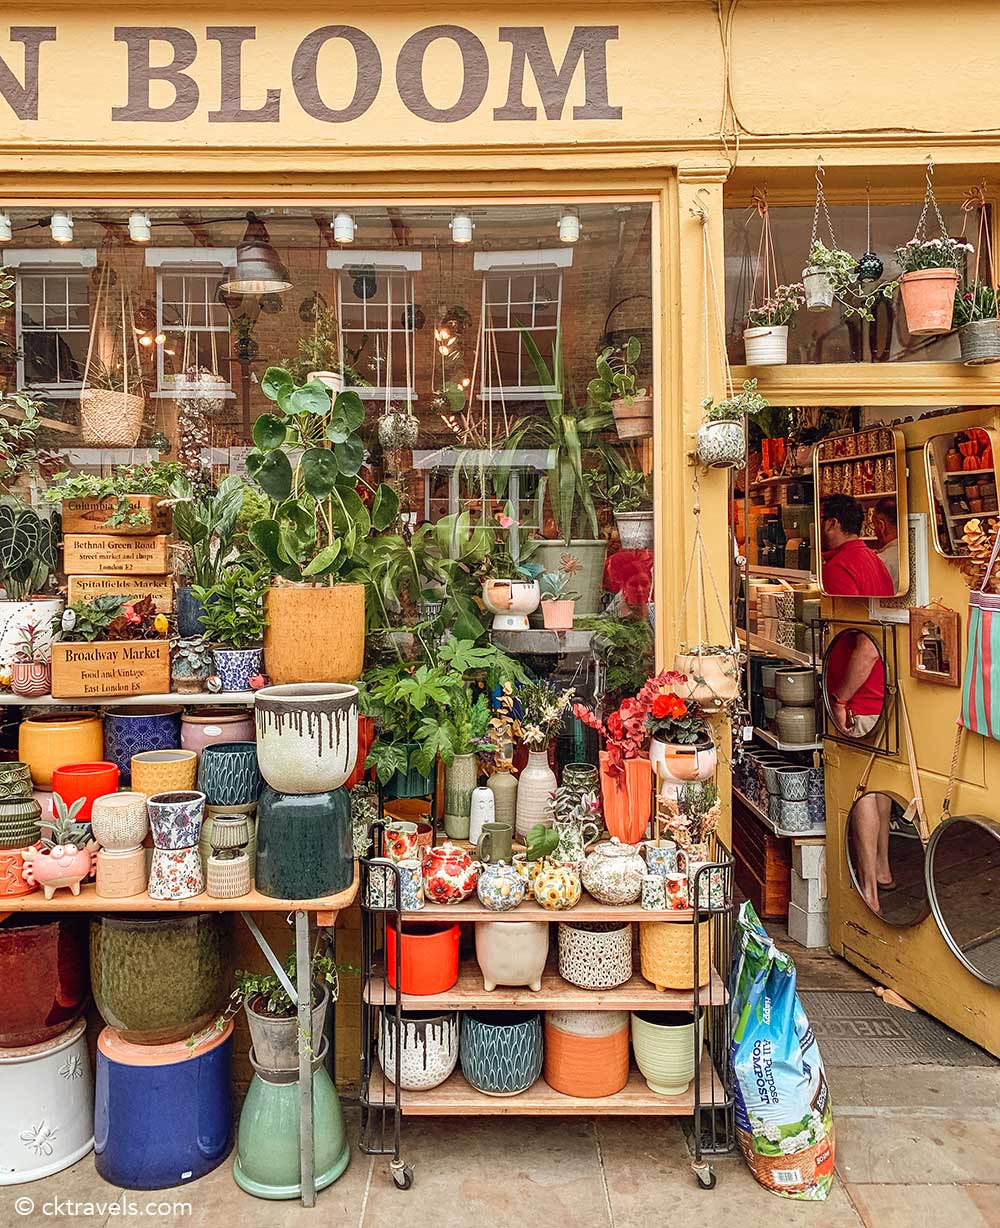 Columbia Road flower market - Instagrammable Places in London - Best Photo Spots